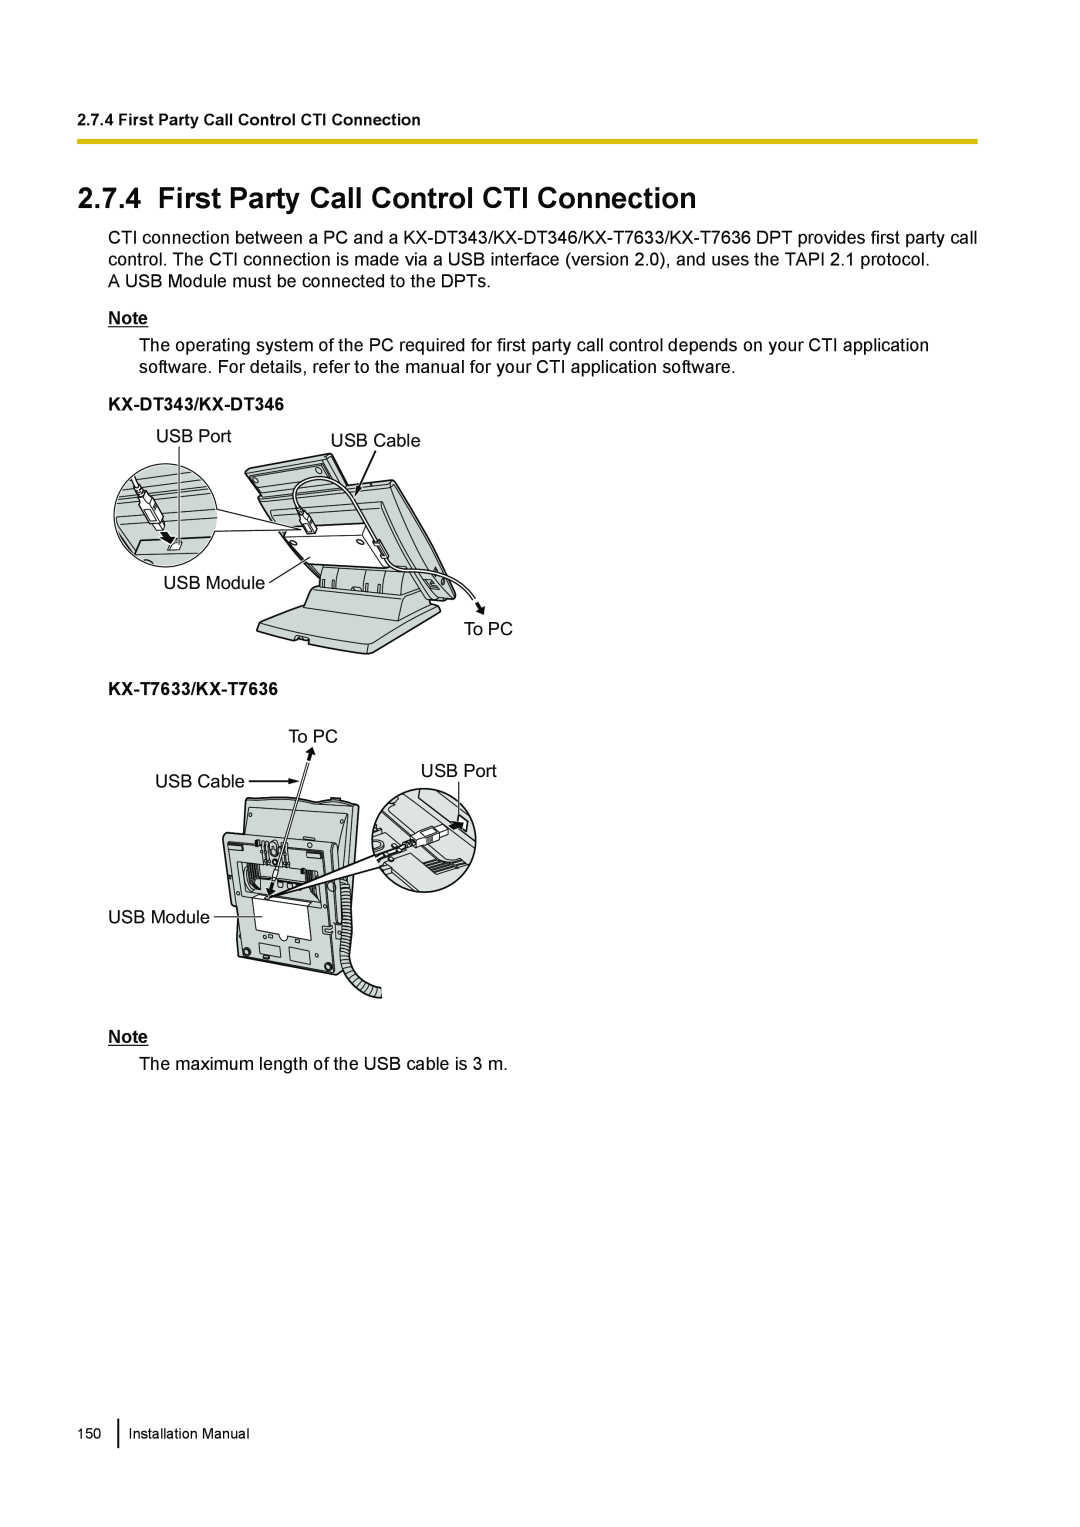 Panasonic KX-TDA100 installation manual First Party Call Control CTI Connection, KX-DT343/KX-DT346, KX-T7633/KX-T7636 